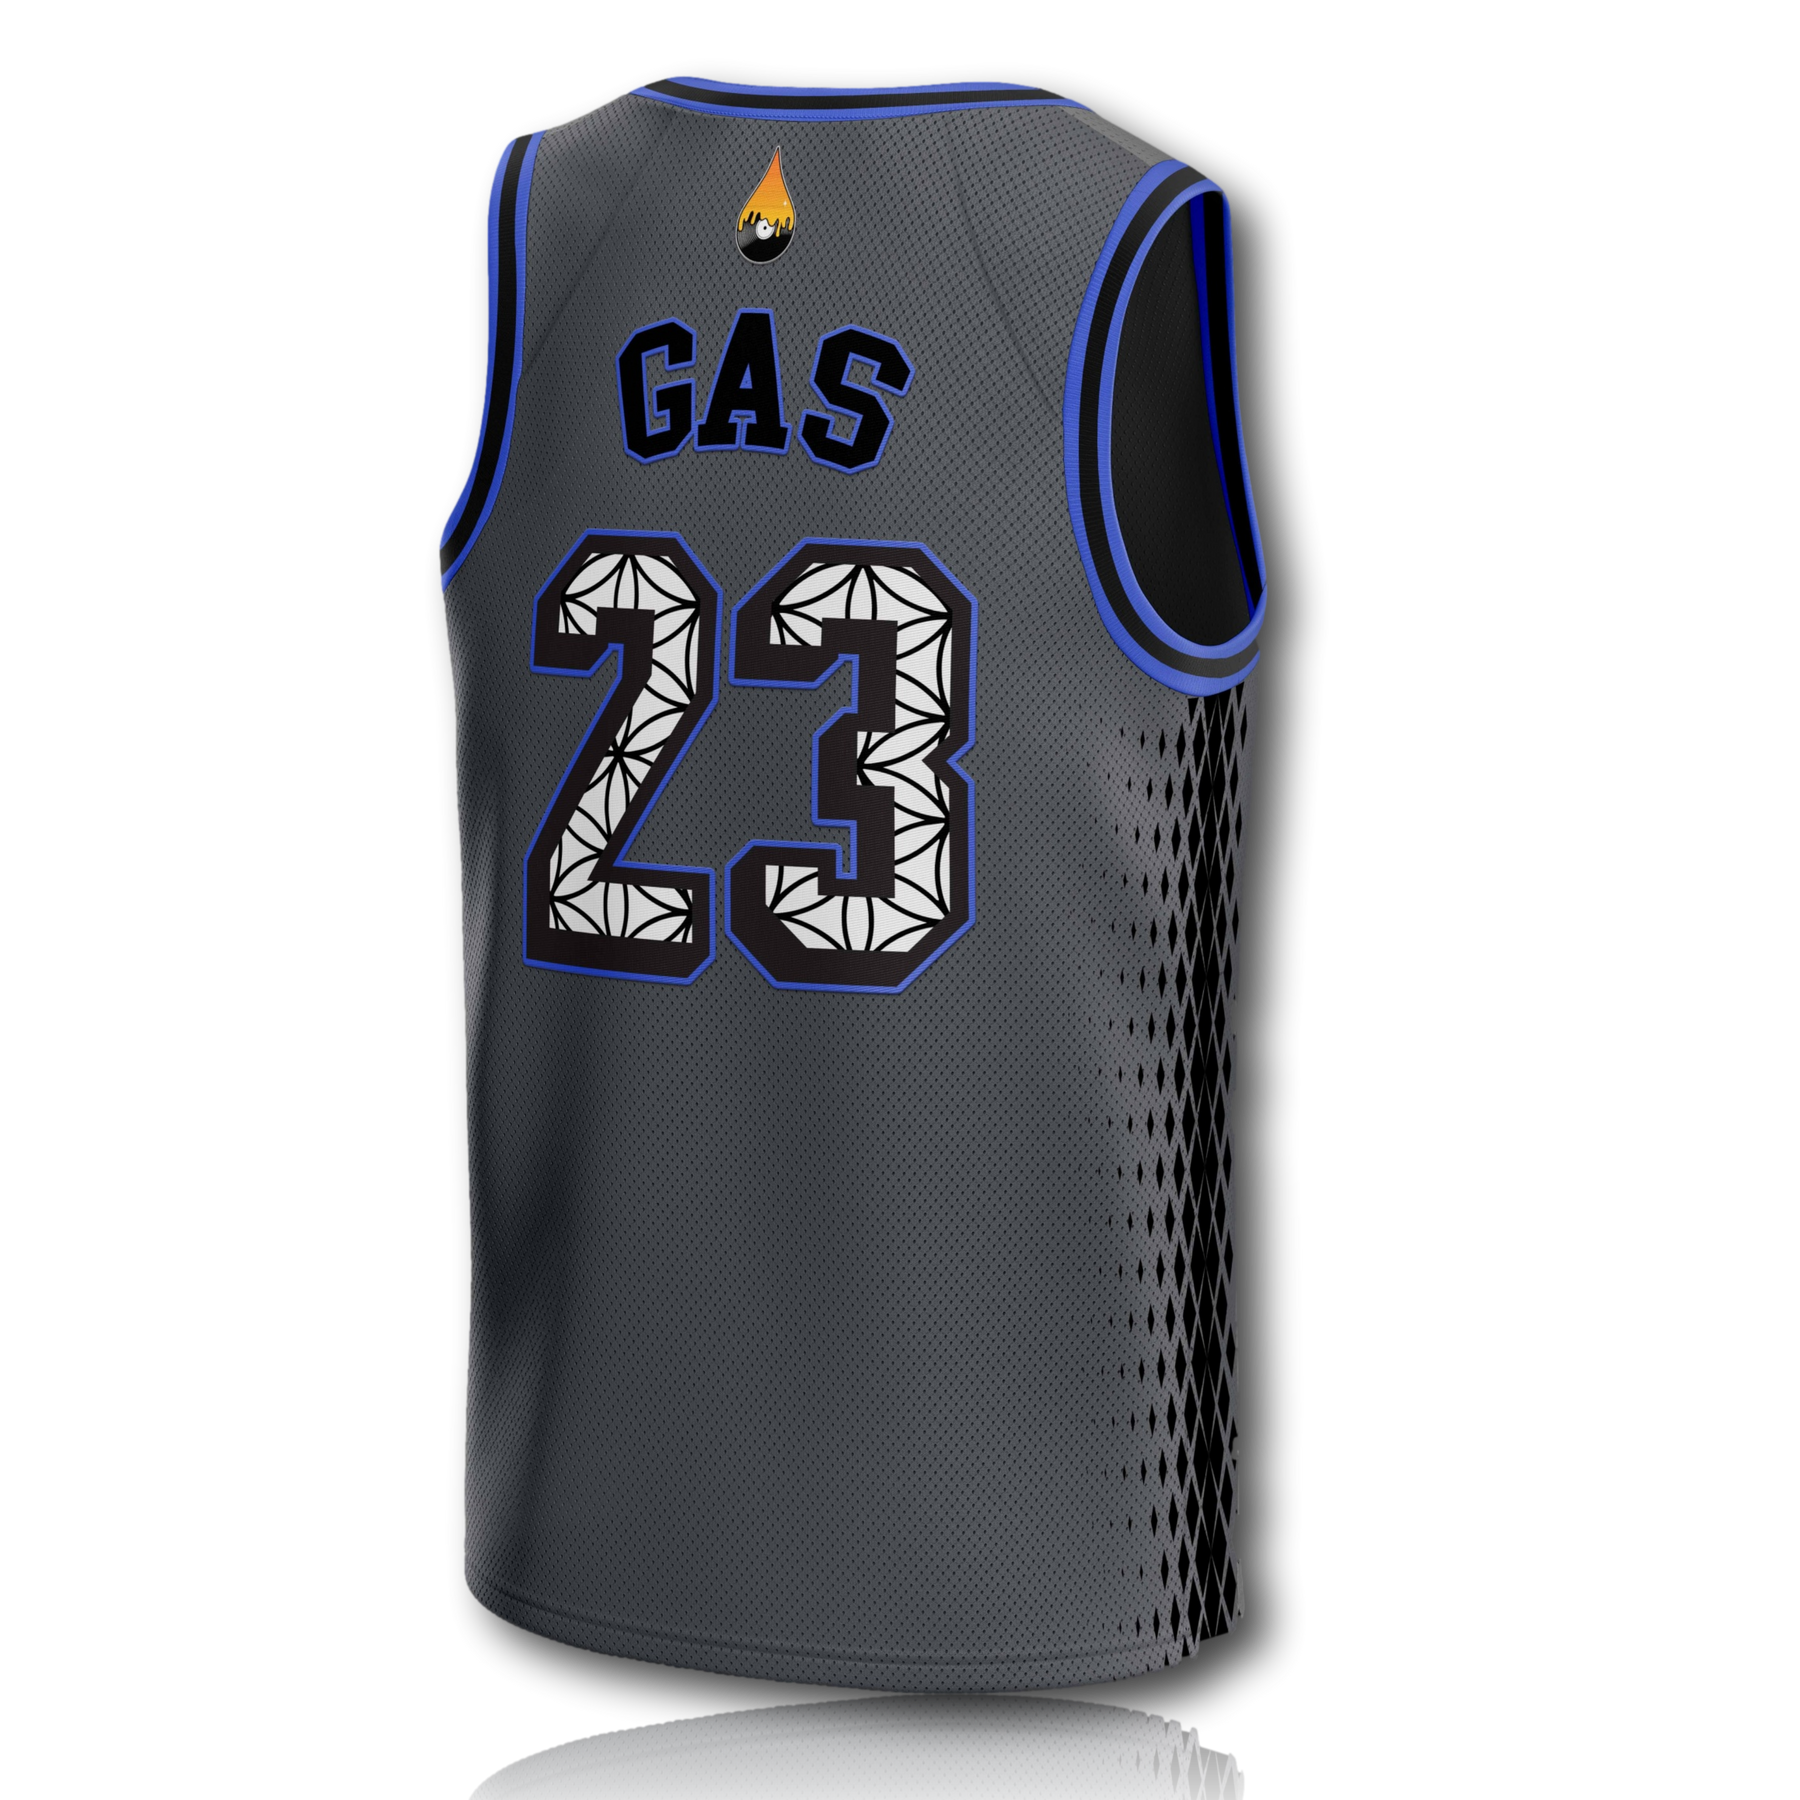 Smoakland Official Custom Basketball Jersey